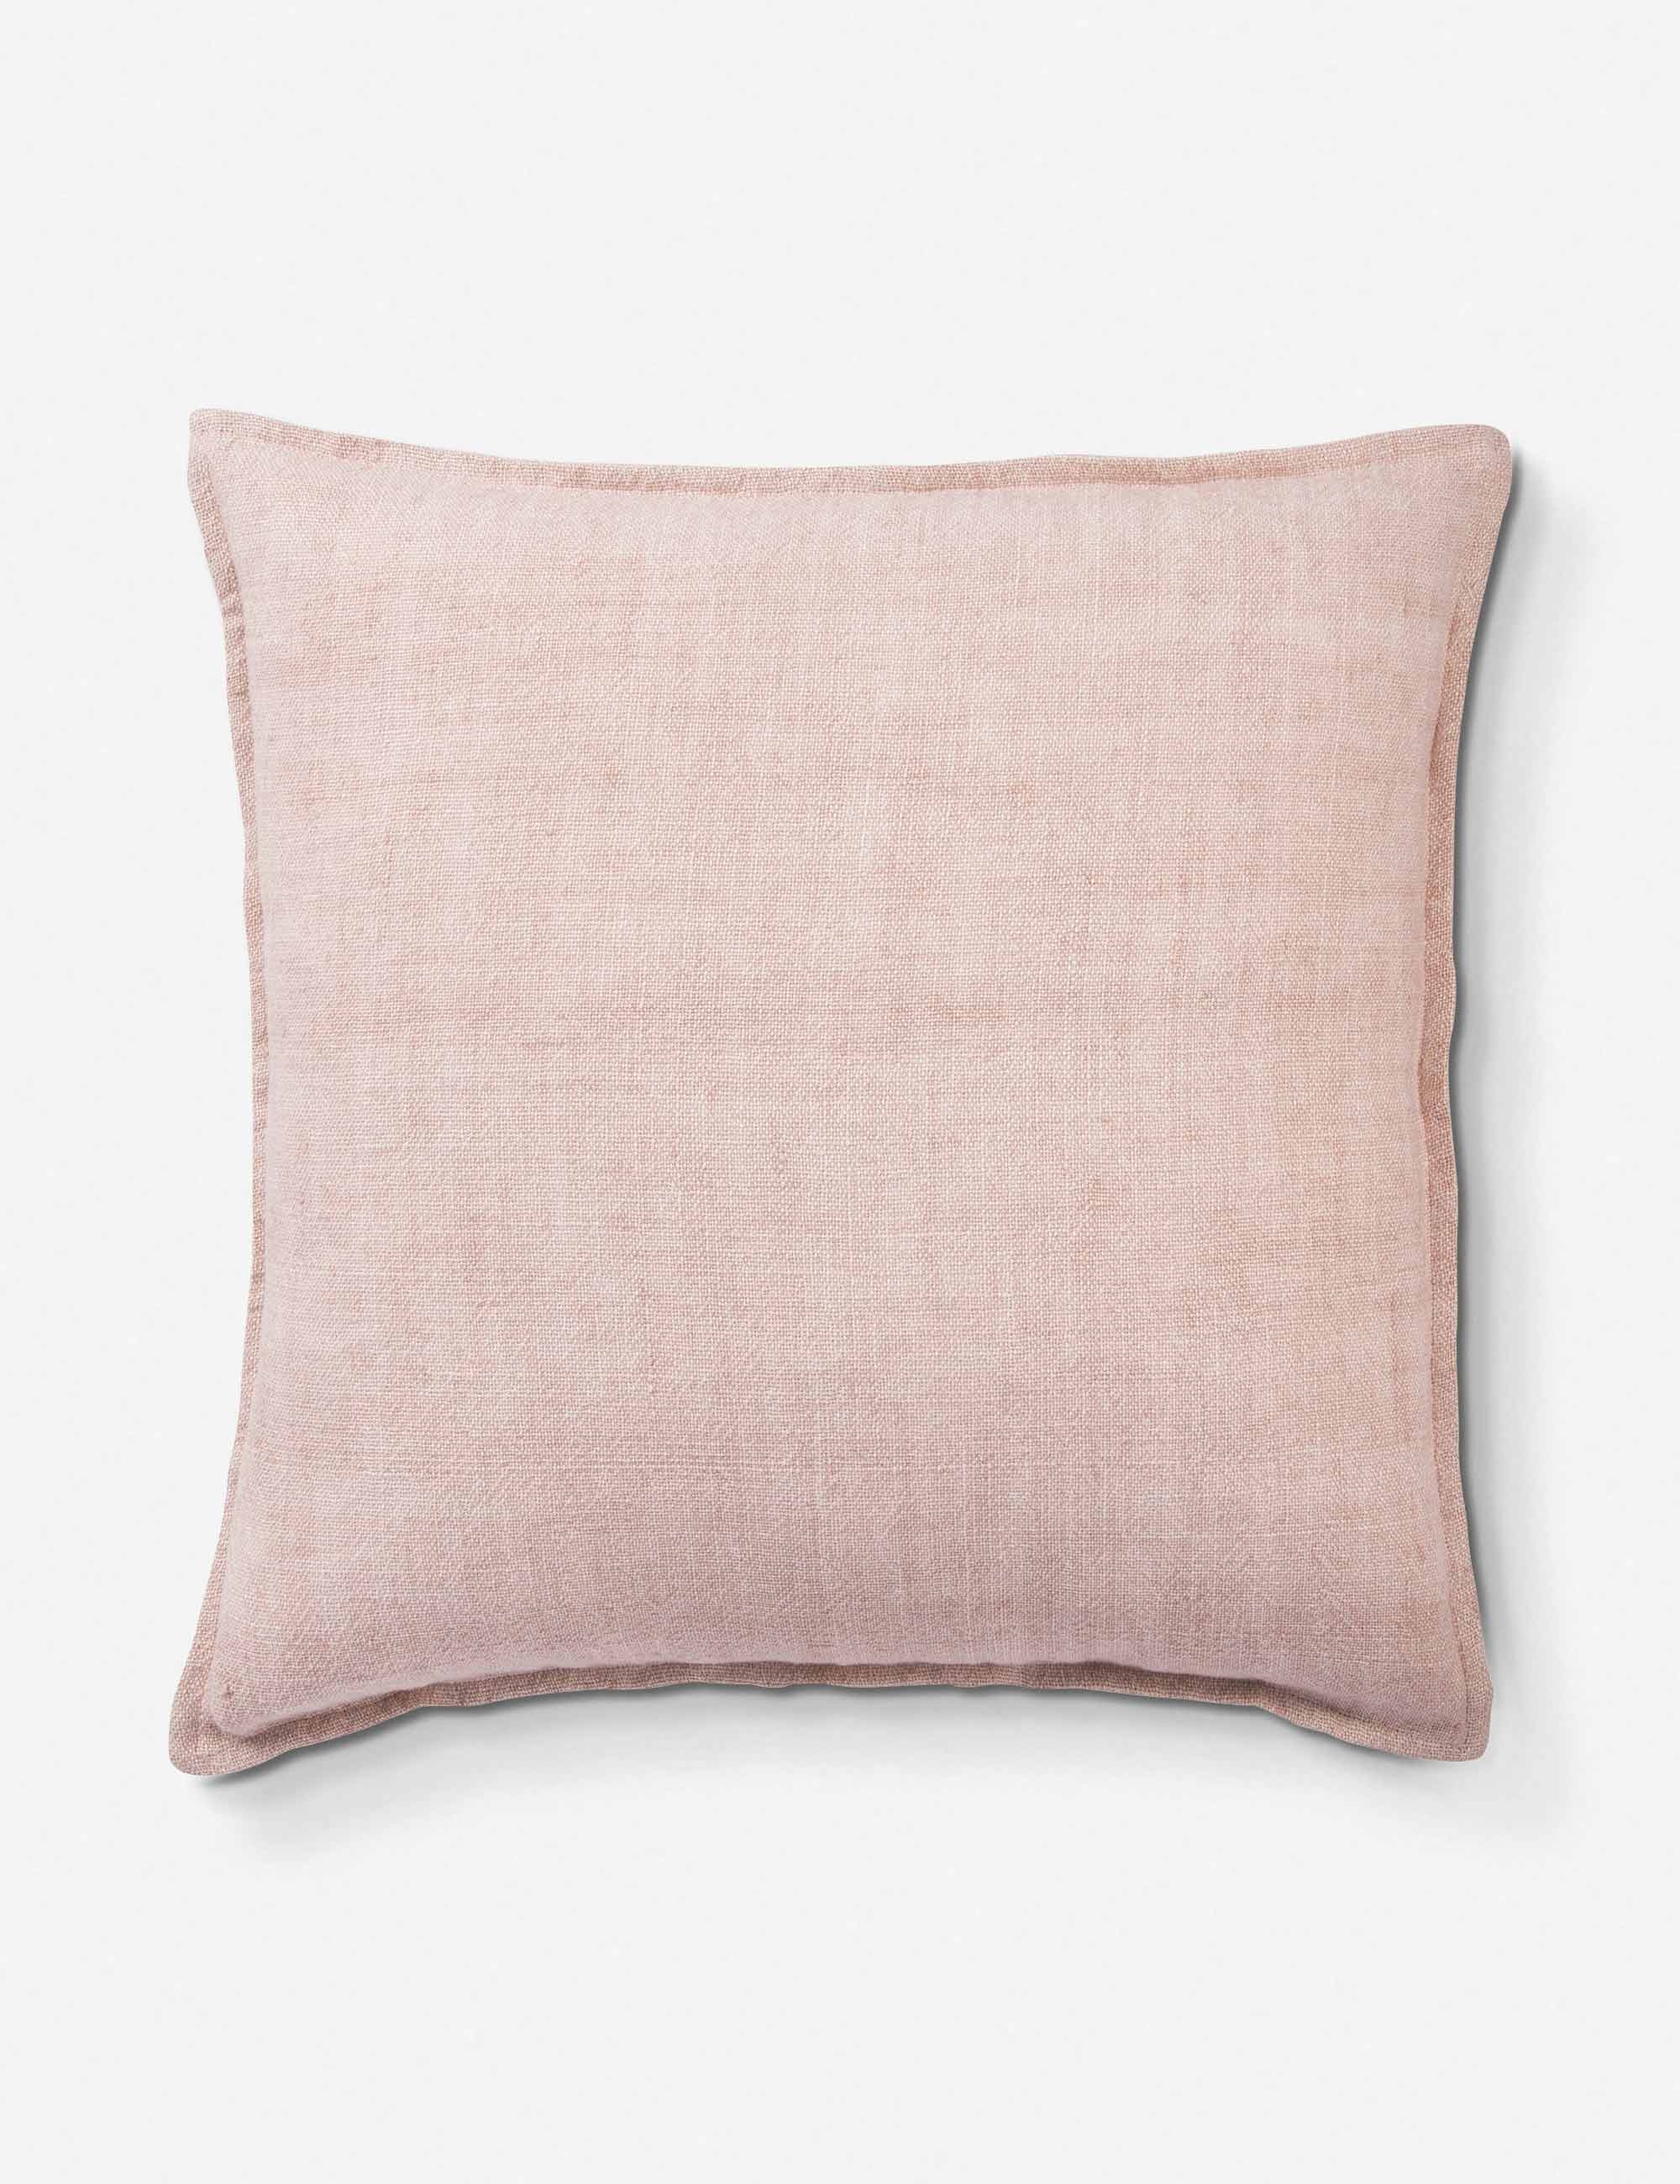 Emalita Linen Pillow, Cameo Rose - Image 0